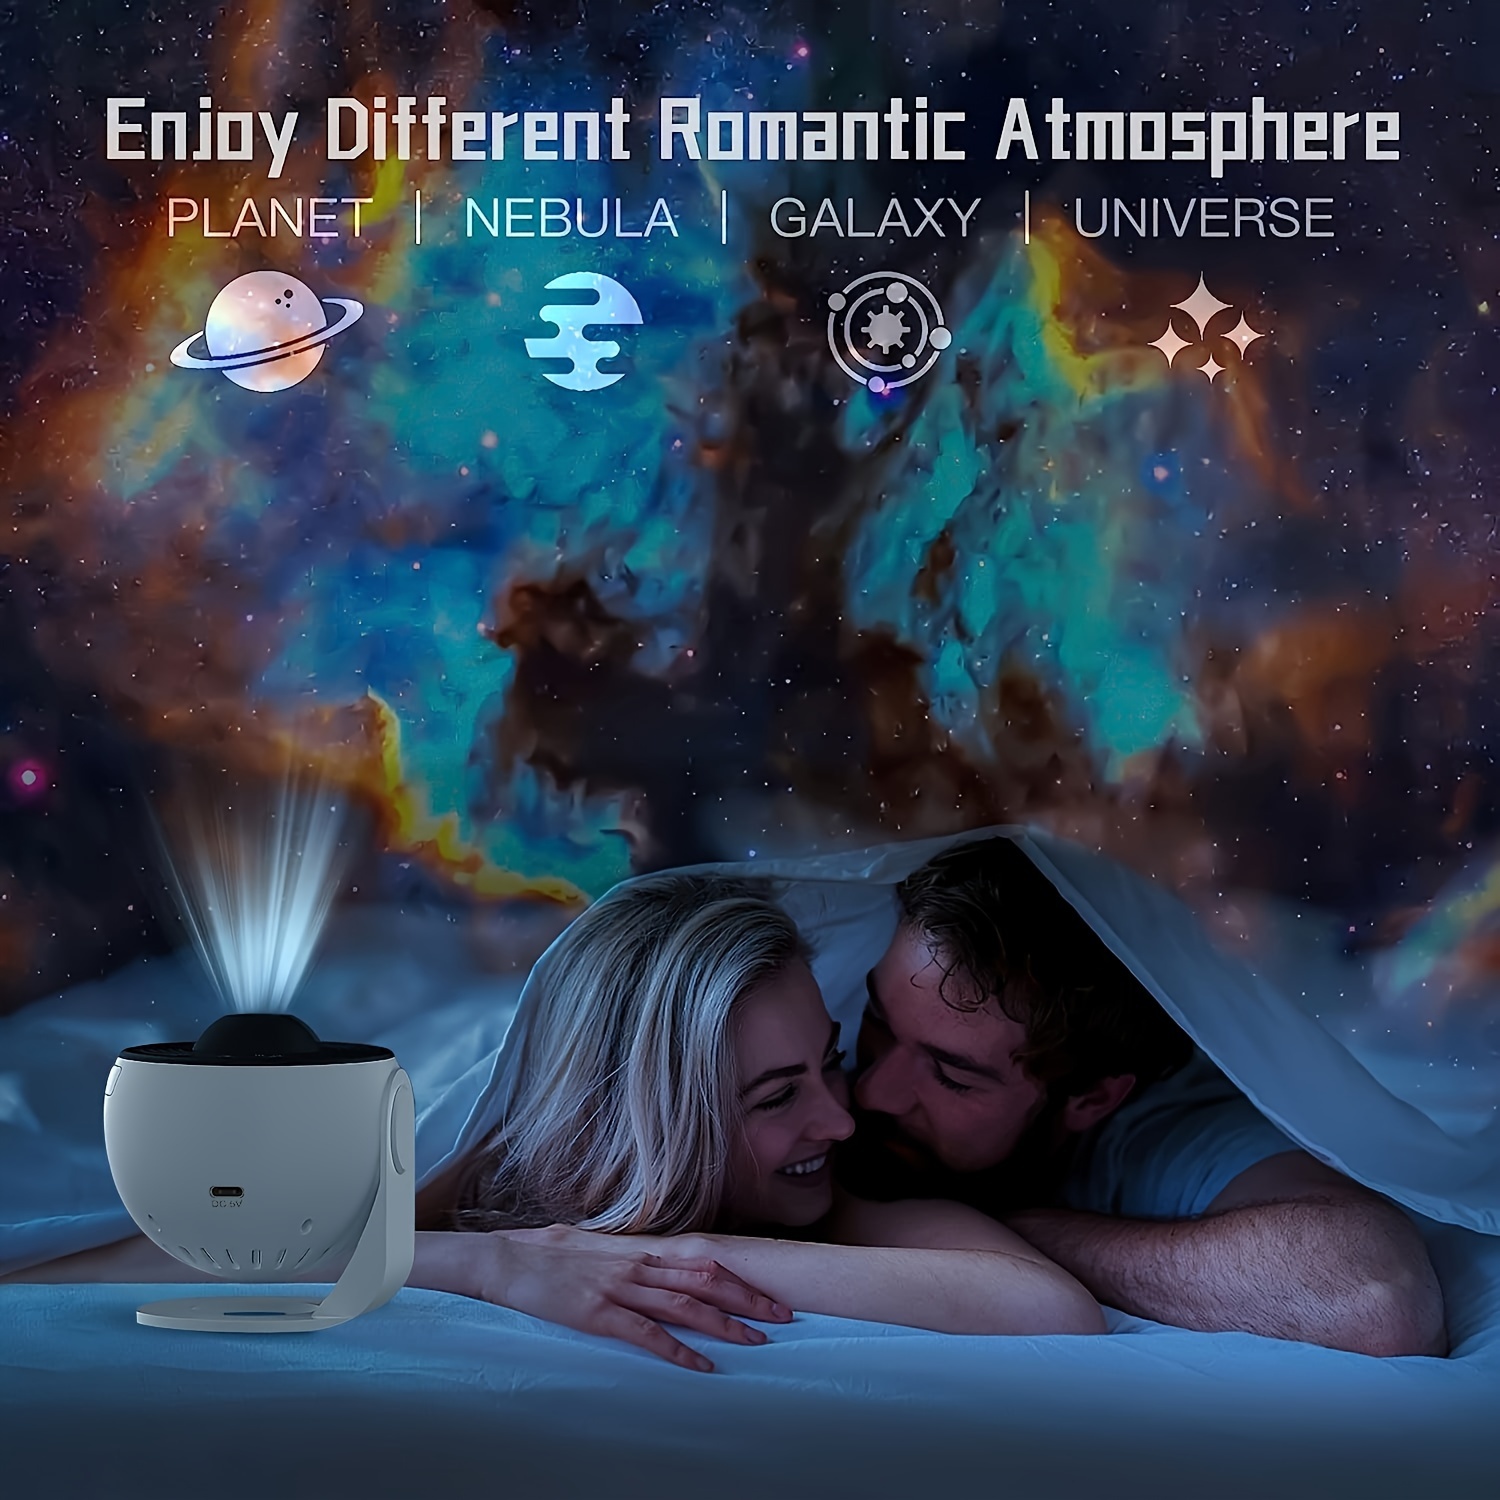 Astronaut Galaxy Star Projector  LED Light Nebula Lamp – encalife